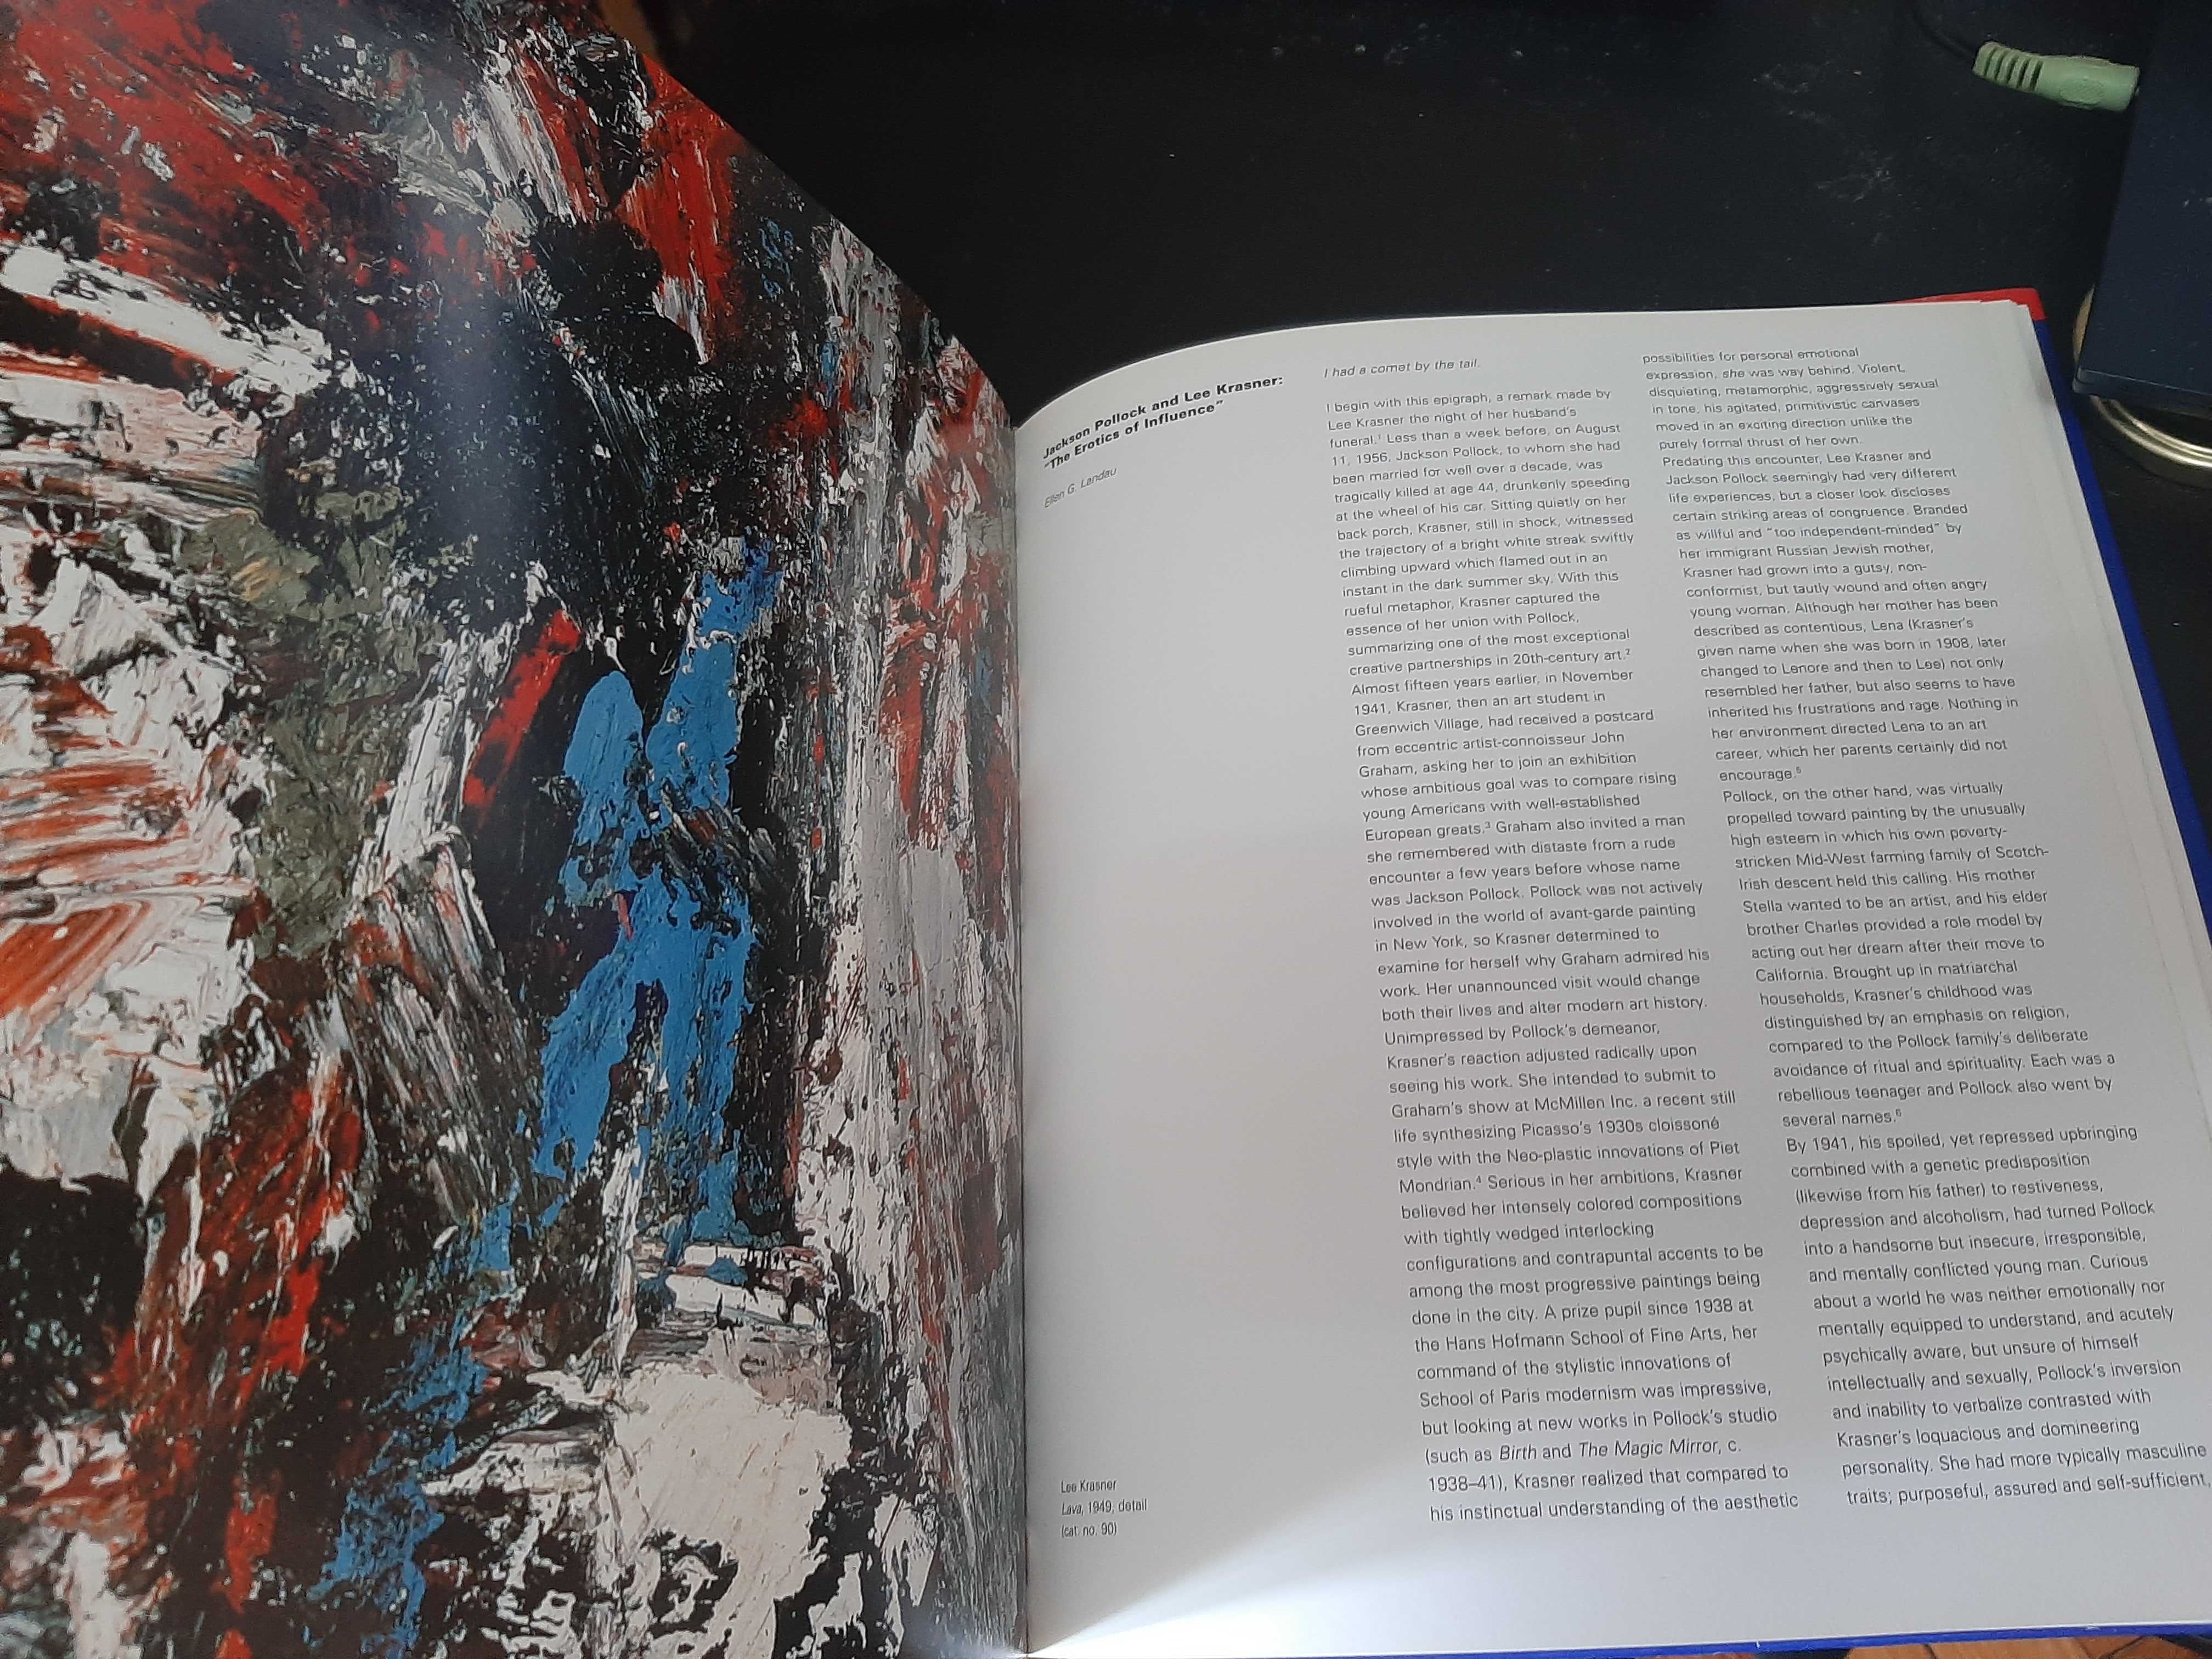 Jackson Pollock In Venice - The "Irascibles" and the New York School